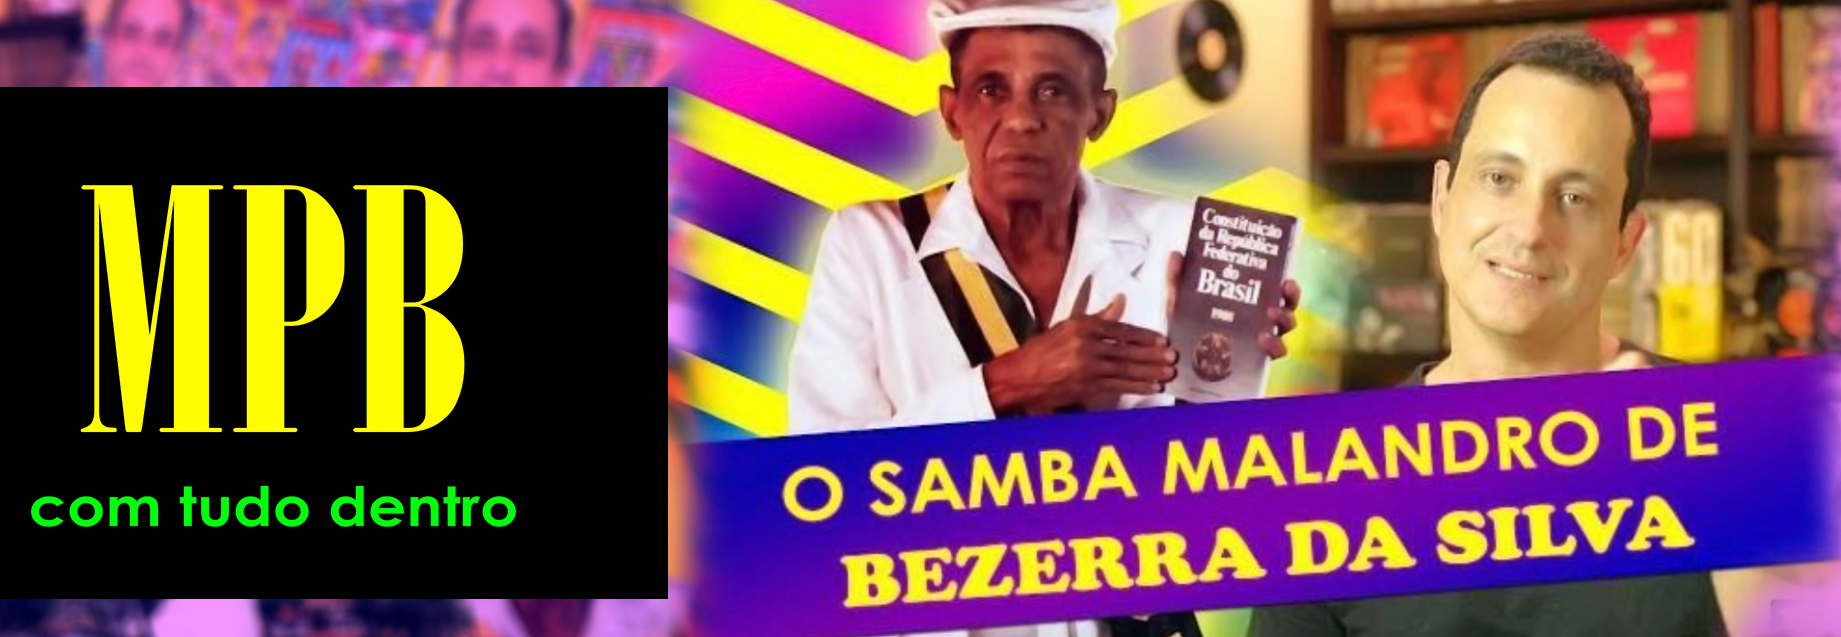 O SAMBA MALANDRO DE BEZERRA DA SILVA